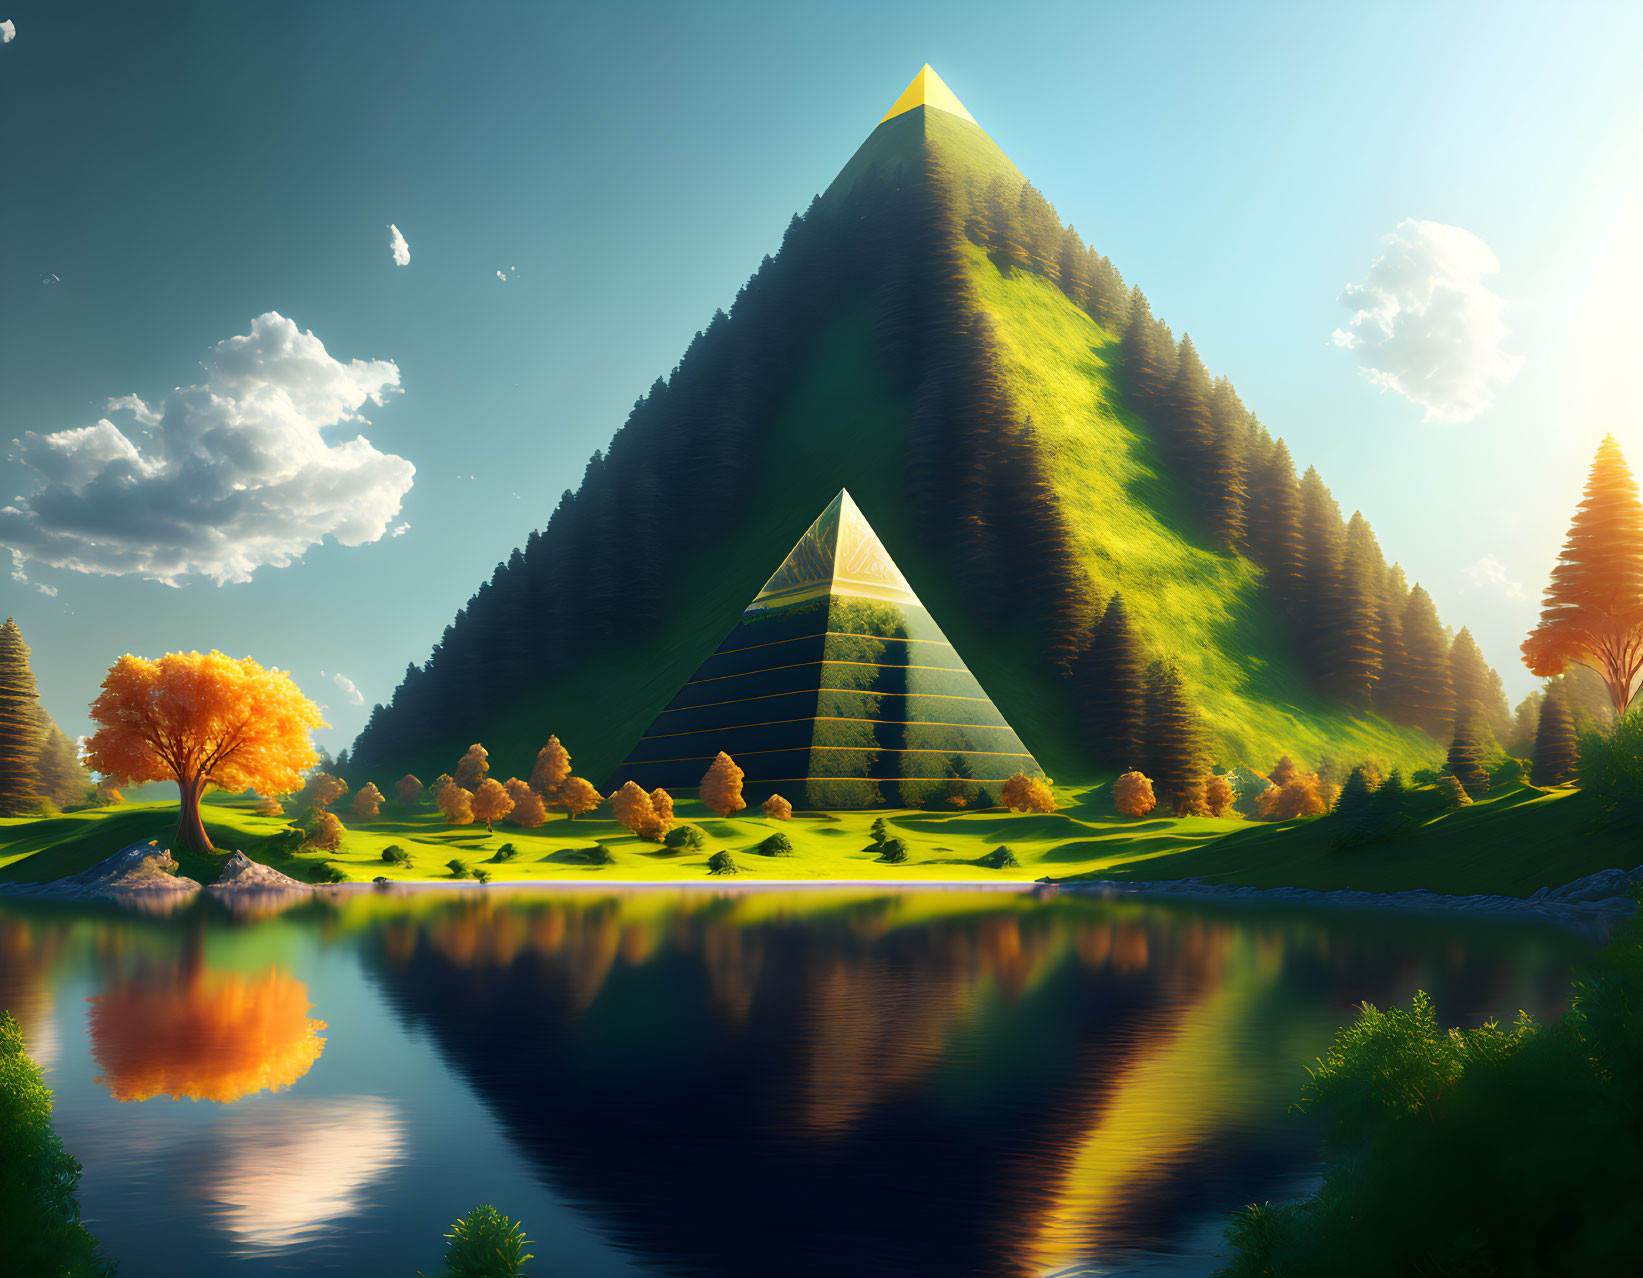 Surreal landscape with pyramid-shaped mountain, autumn trees, lake, sunny sky